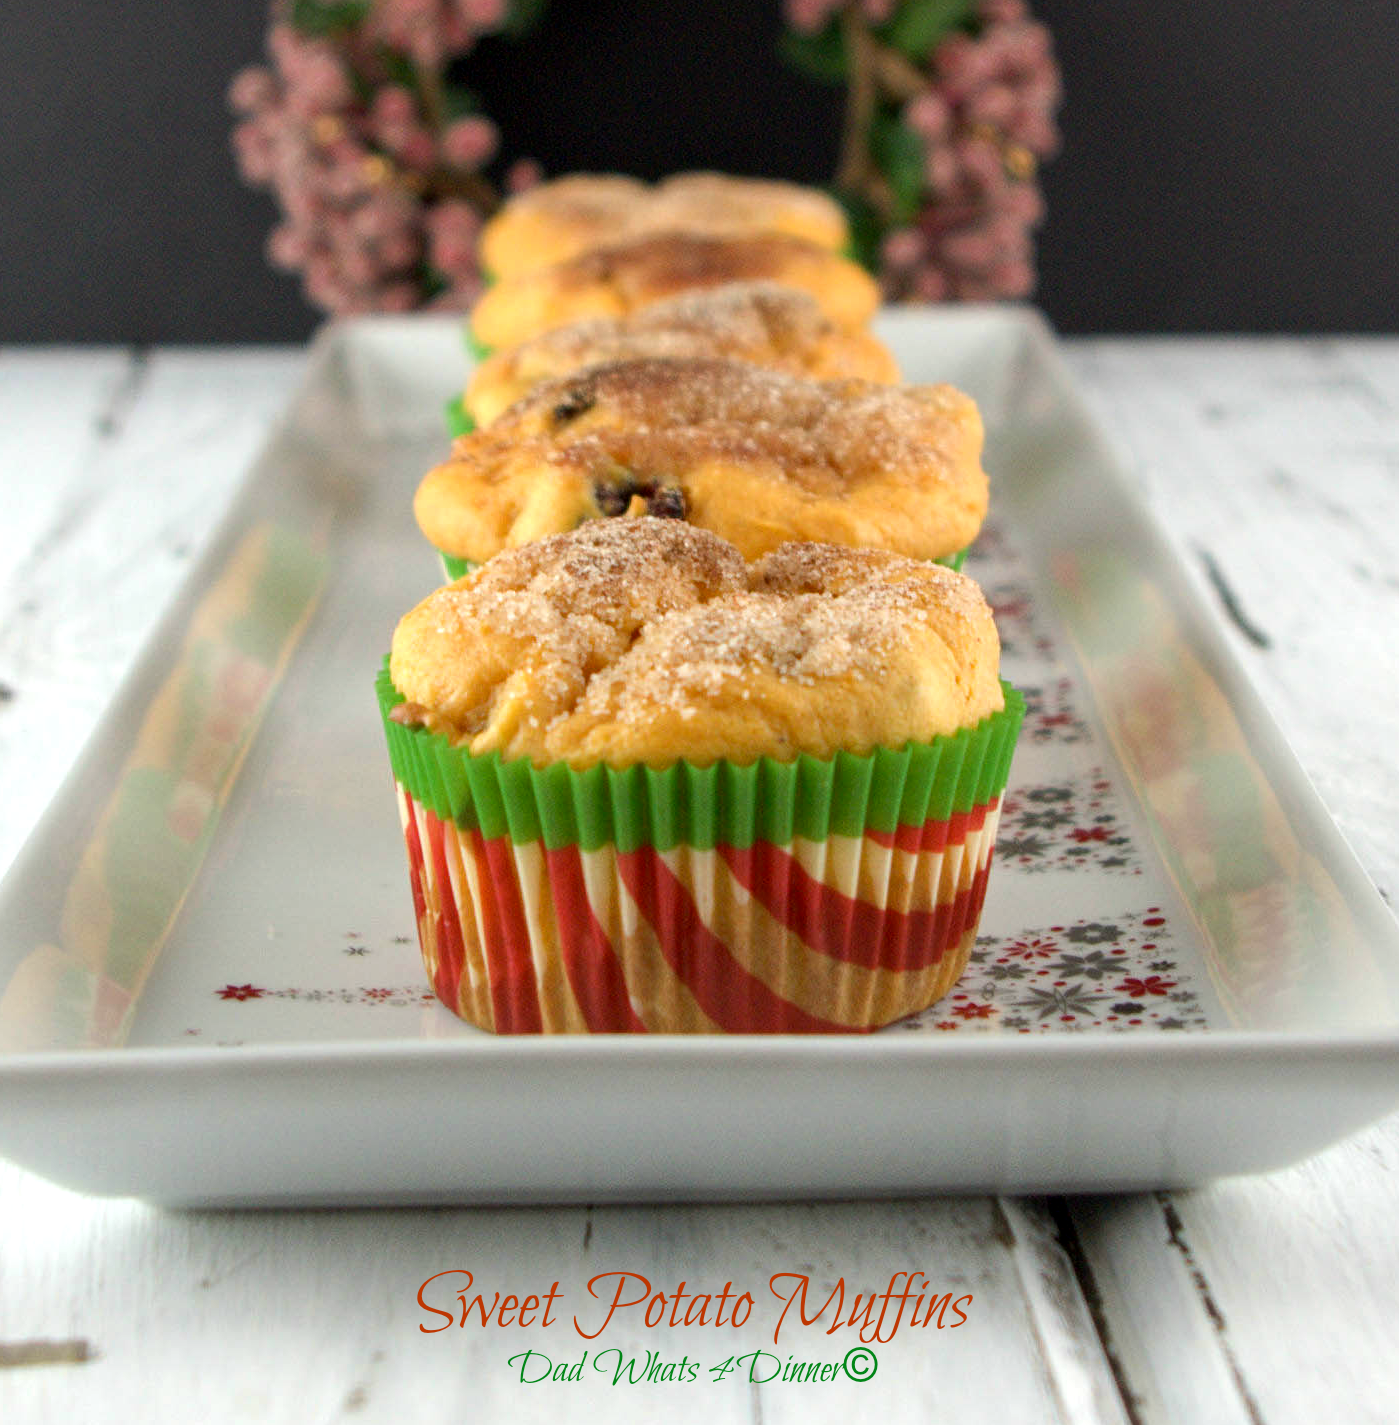 Sweet Potato Muffins DadWhats4Dinner.com©